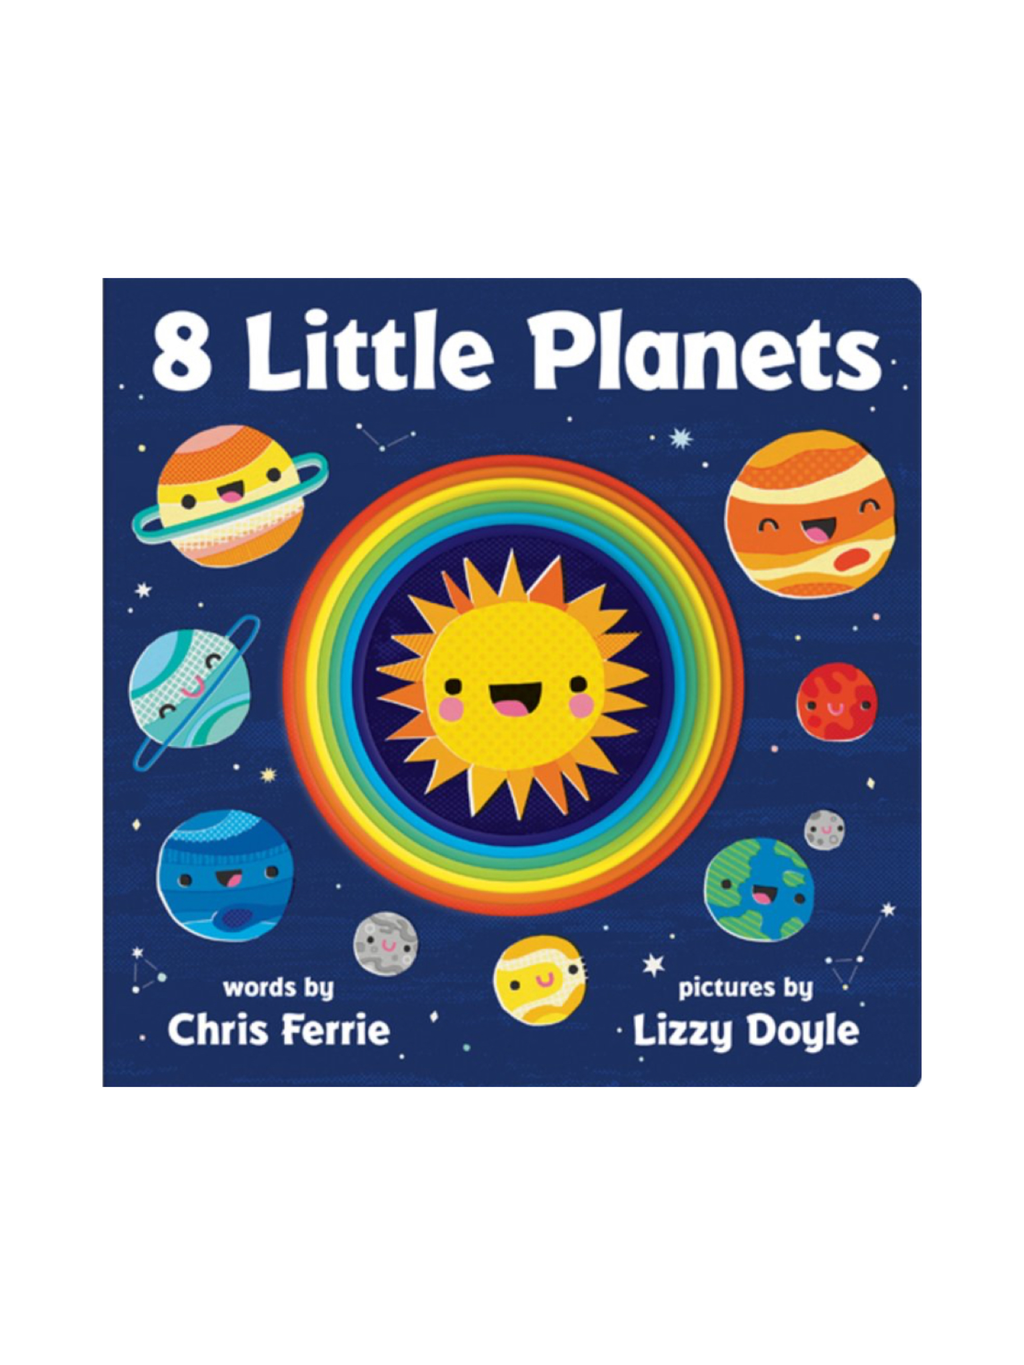 8 Little Planets!